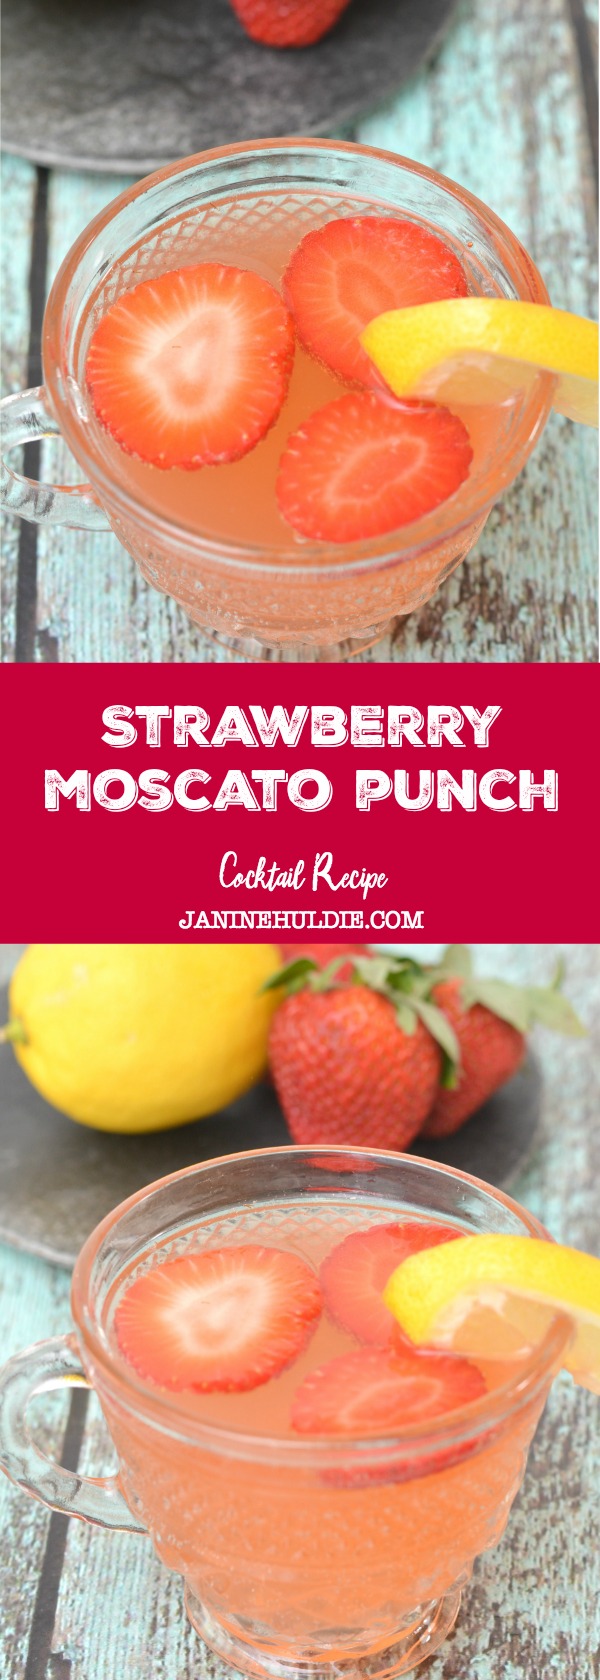 Strawberry Moscato Punch Recipe